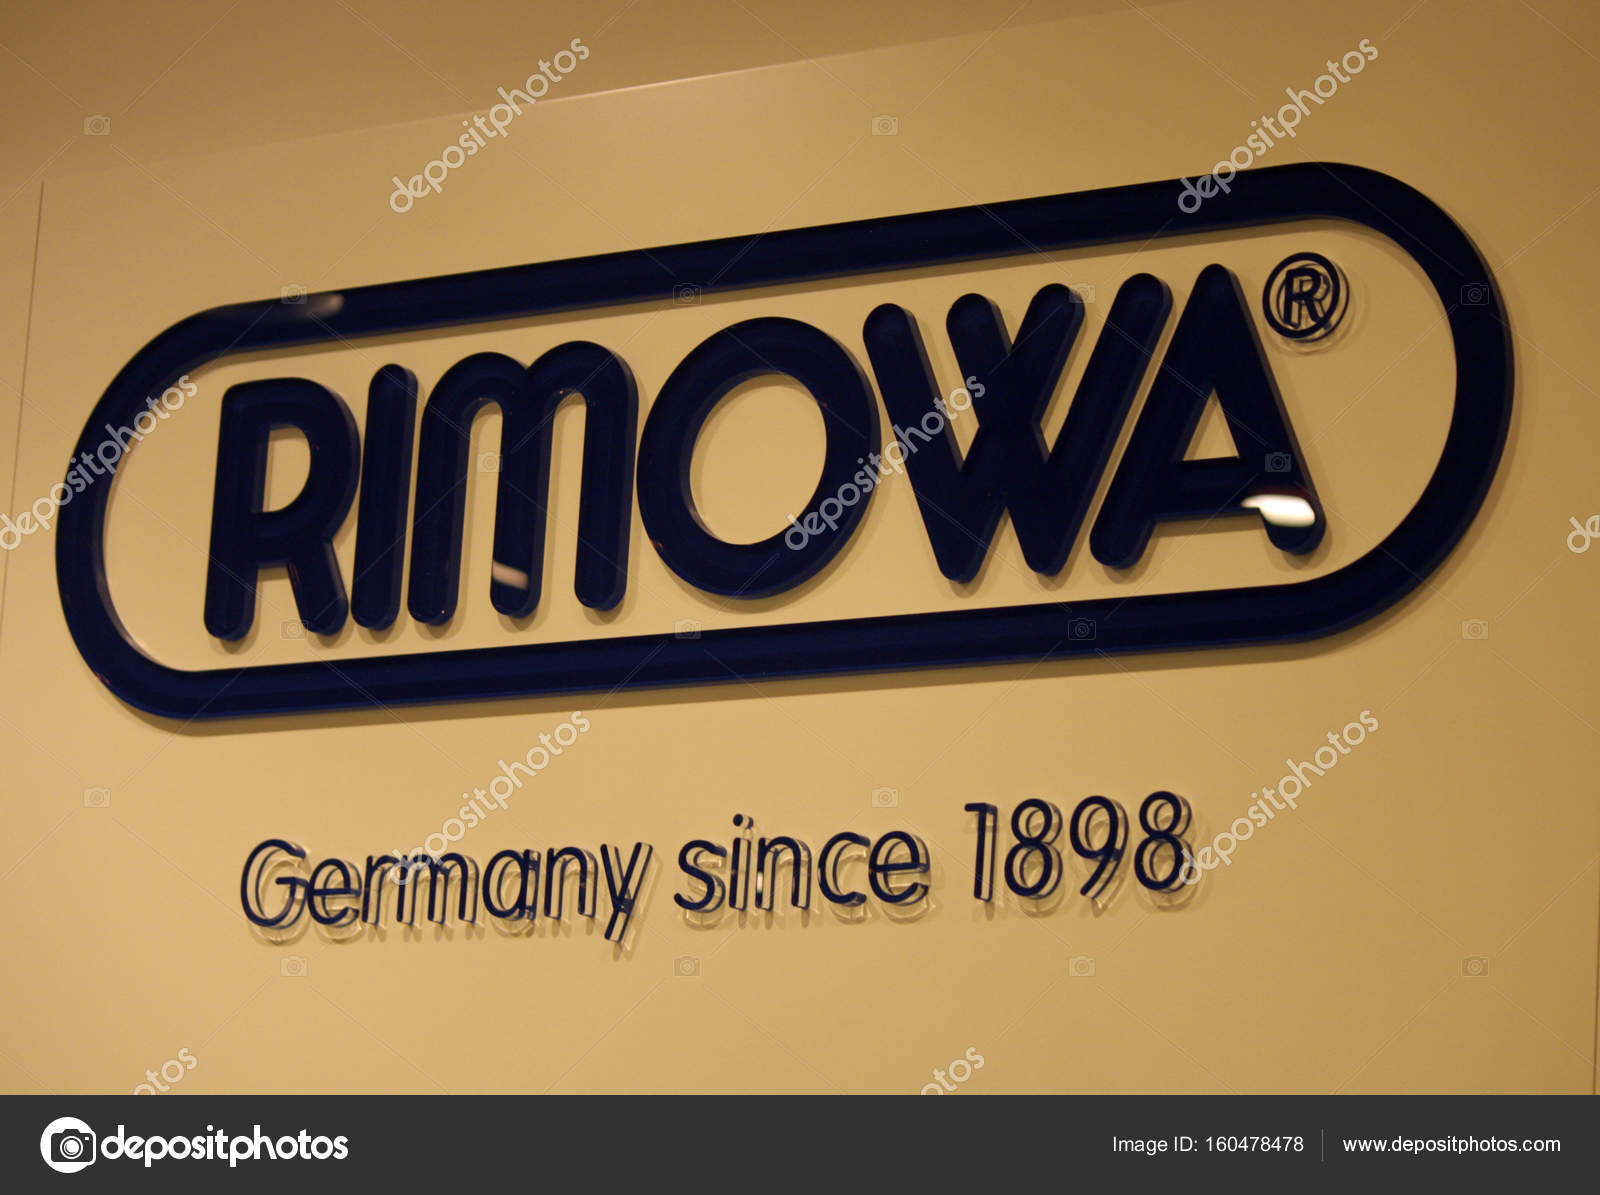 rimowa old logo